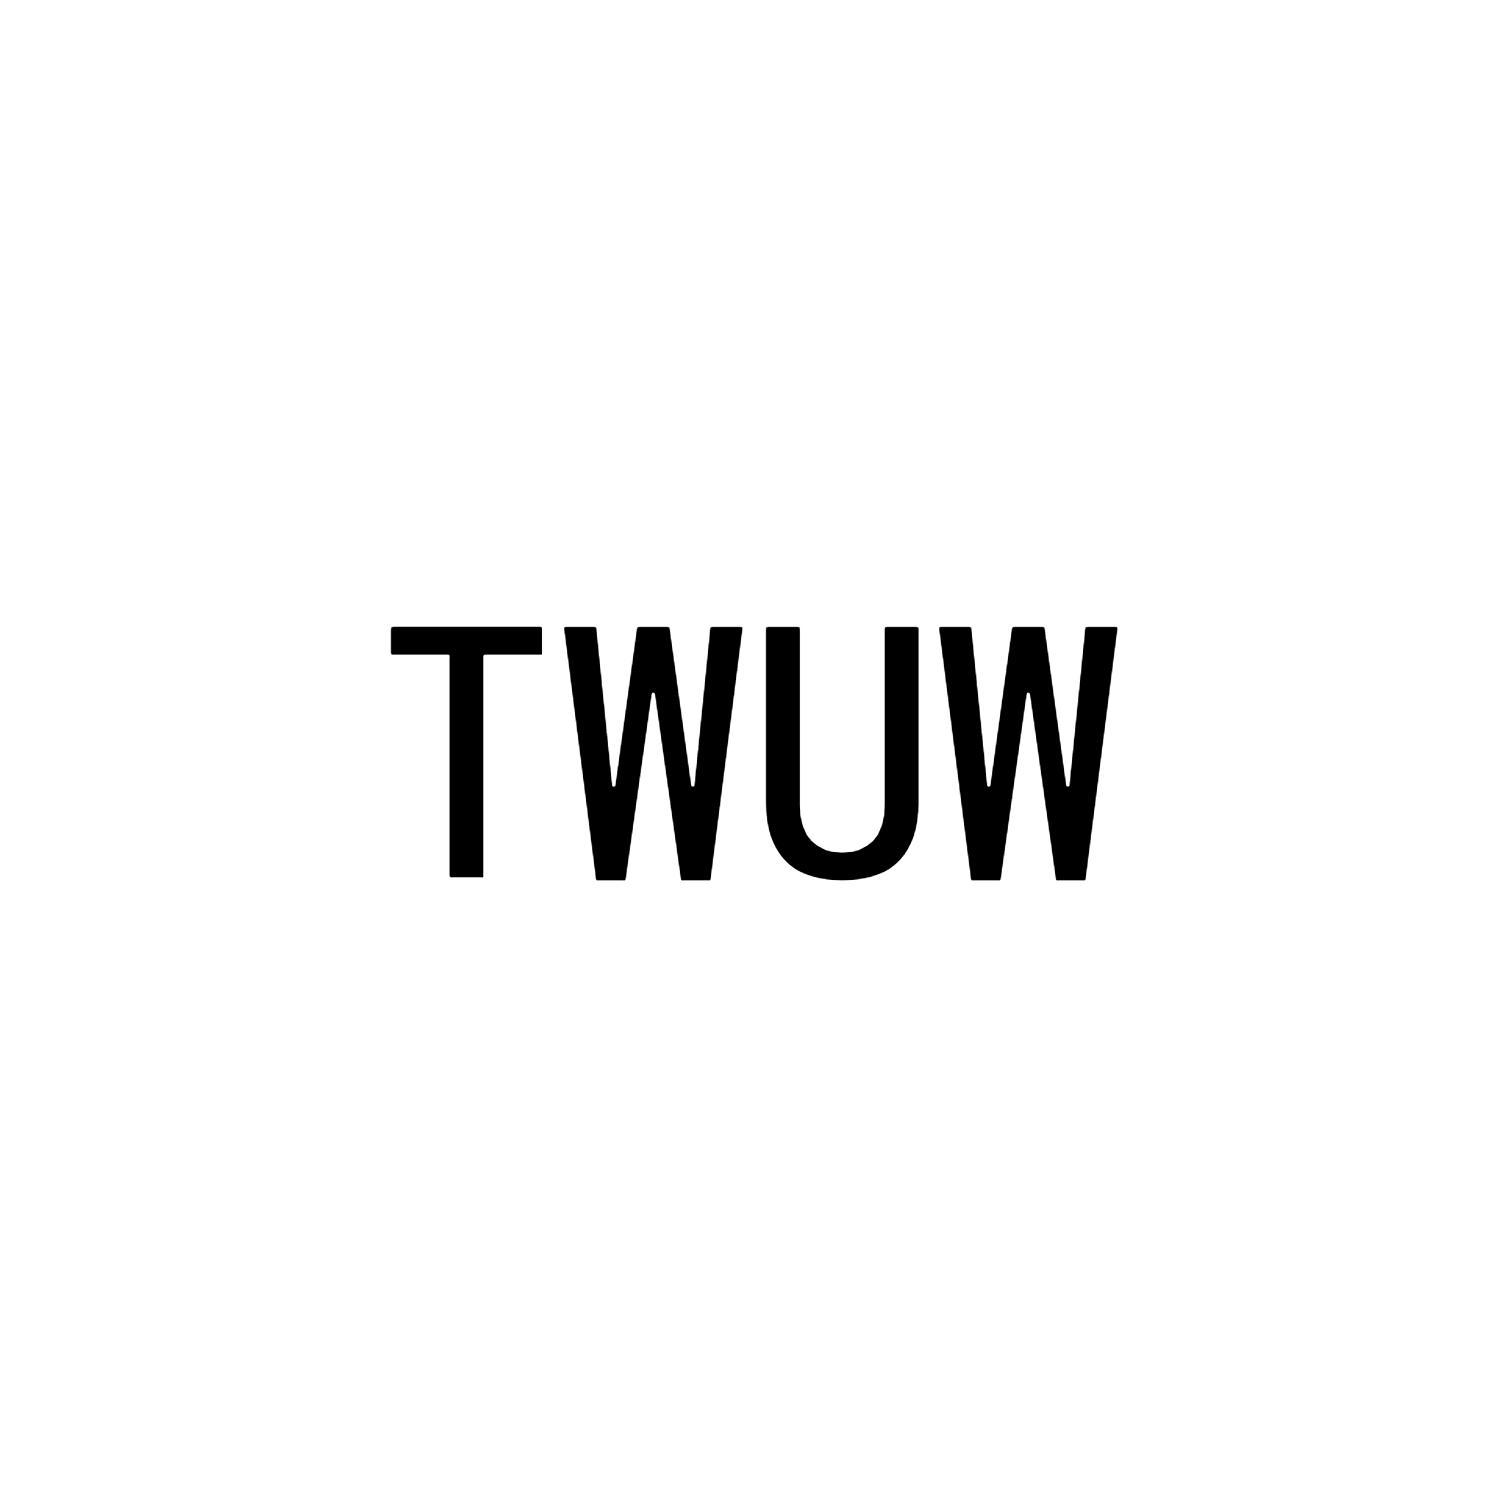 TWUW